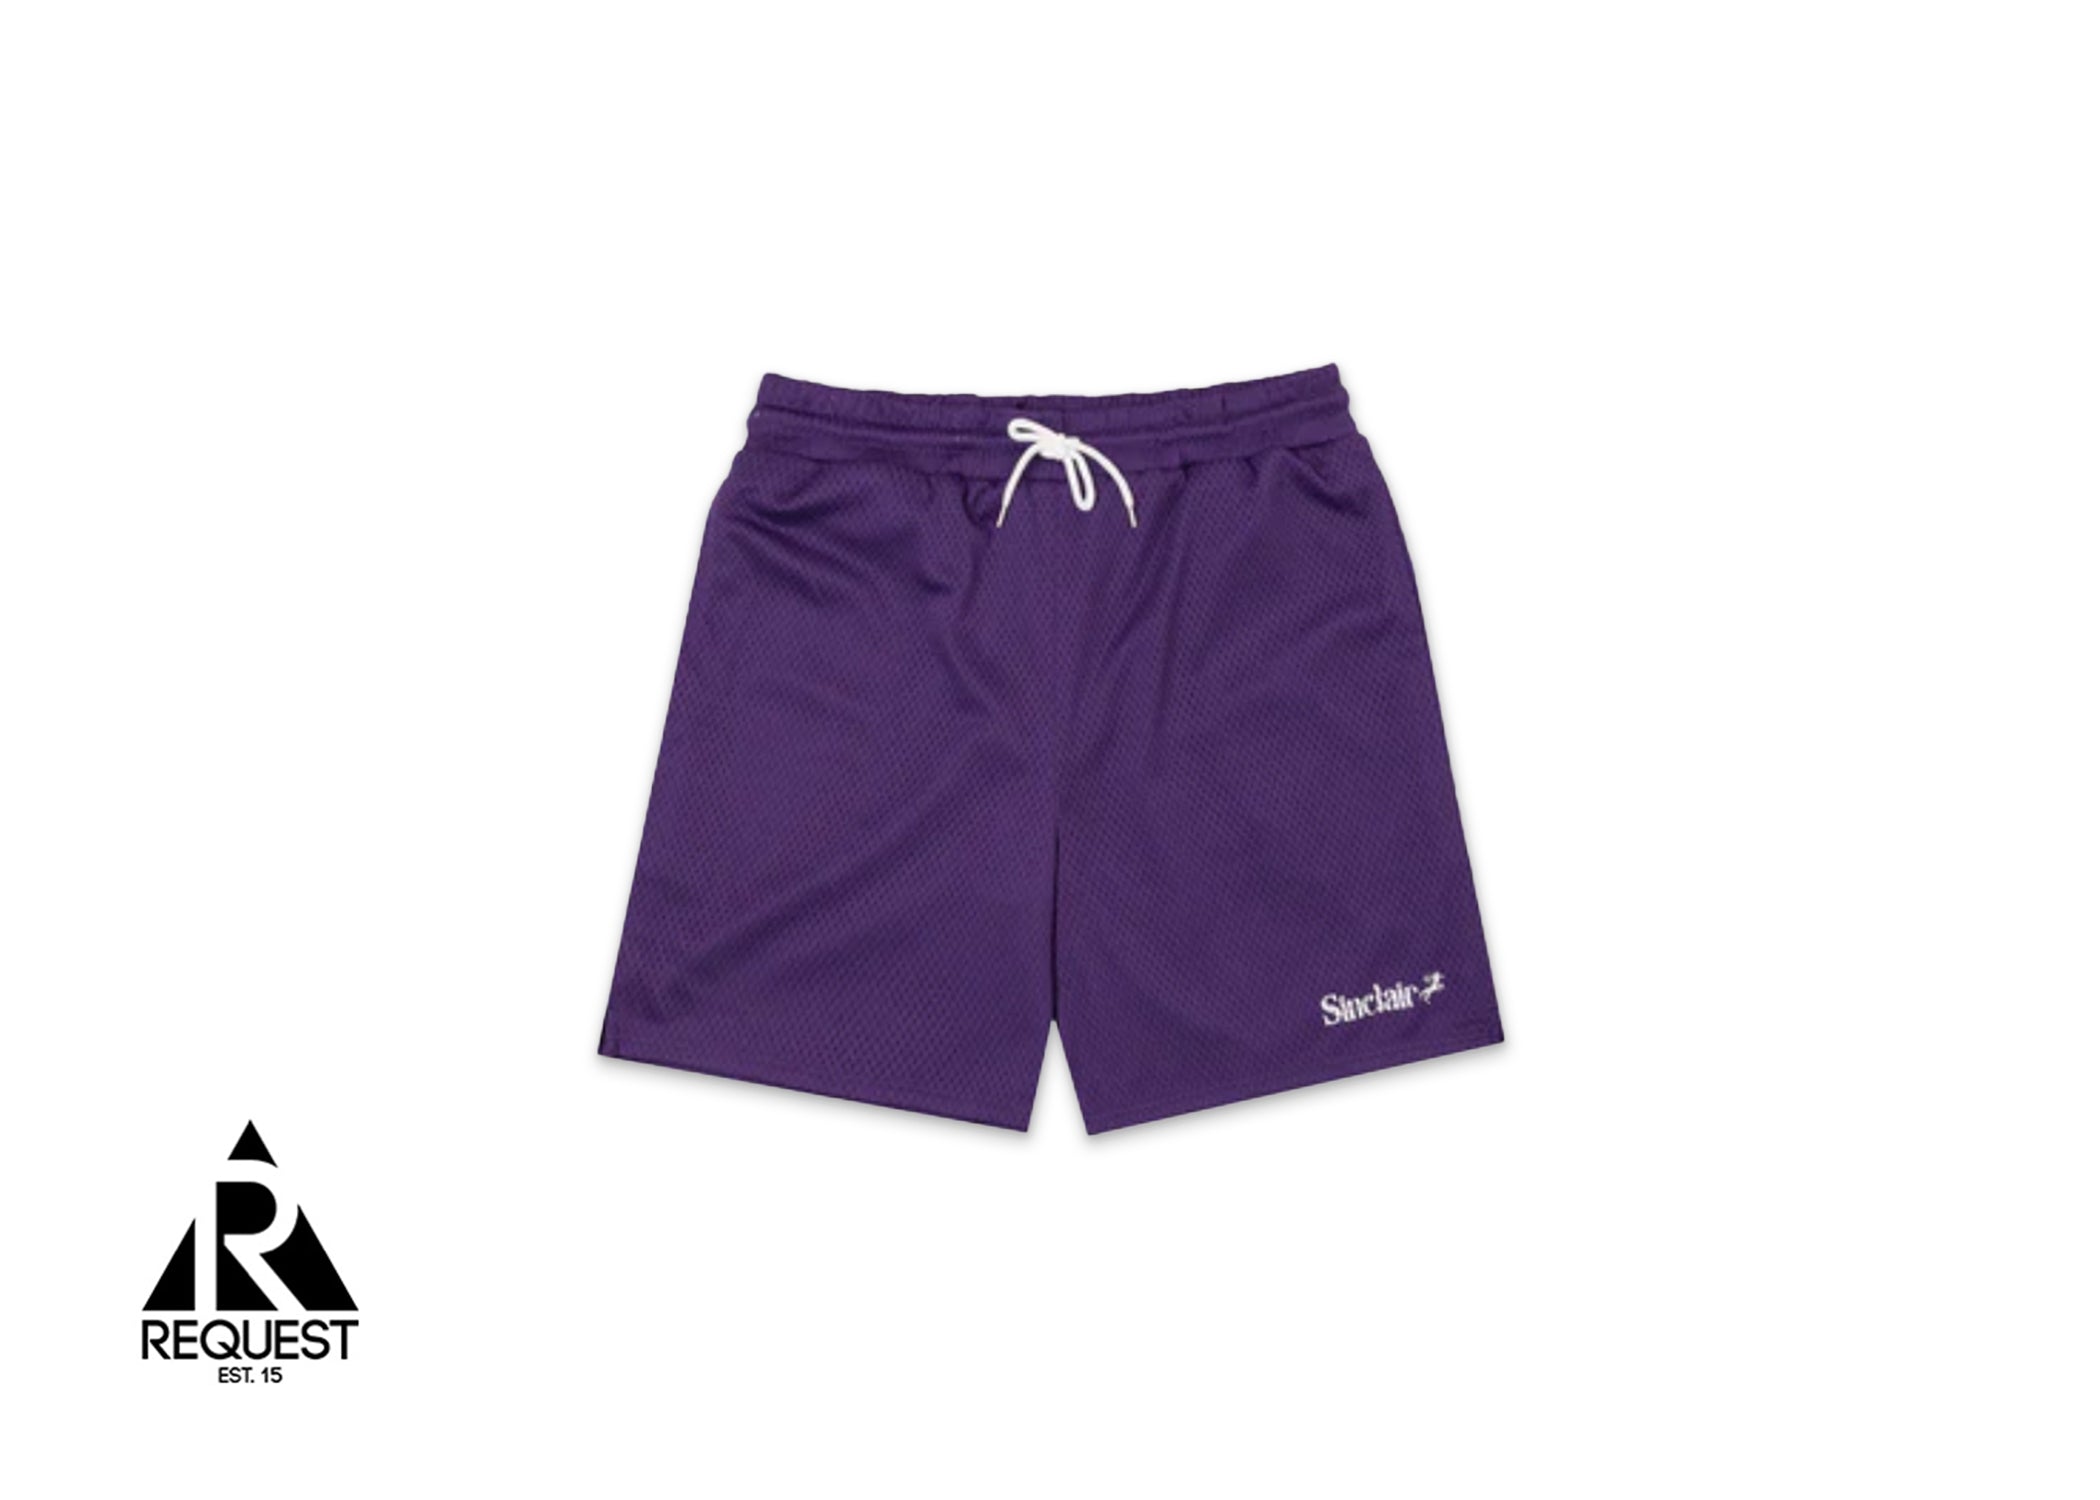 Sinclair Clairssential Mesh Shorts "Purple"